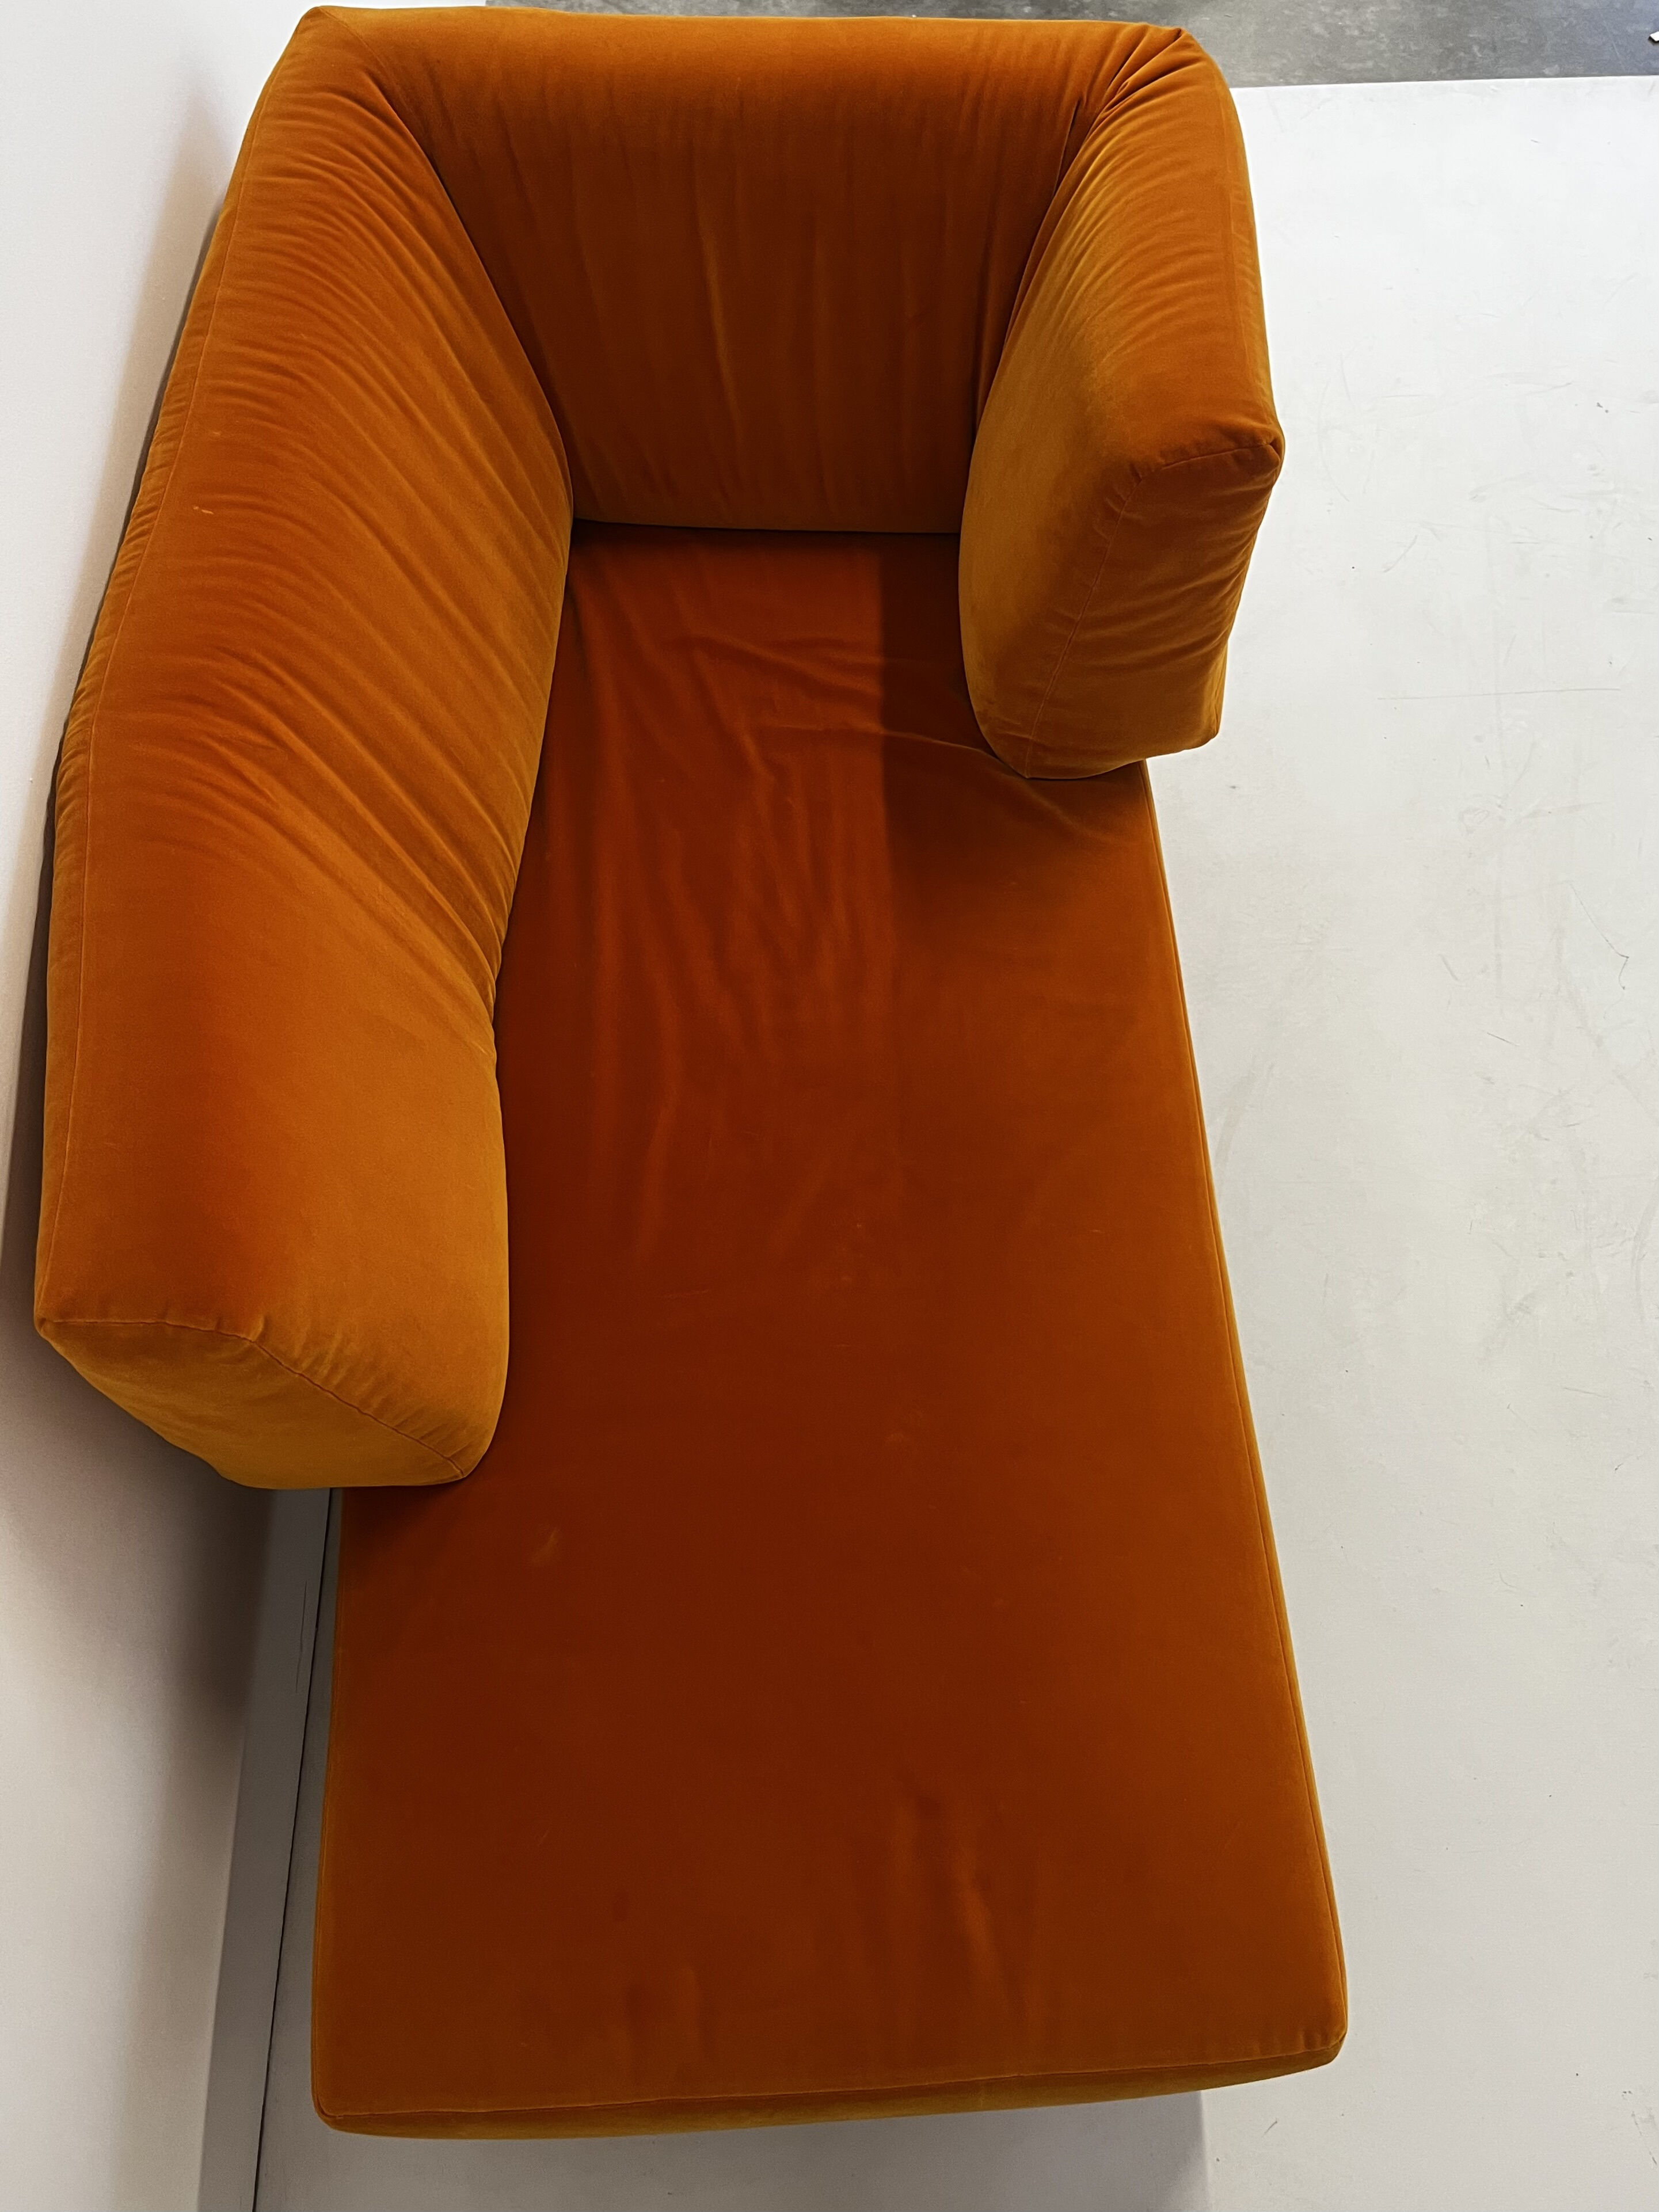 edra-sofa-la-femme-stoff-samt-orangefarben-gestell-stahl-verchrom-mf-0002587-001-2